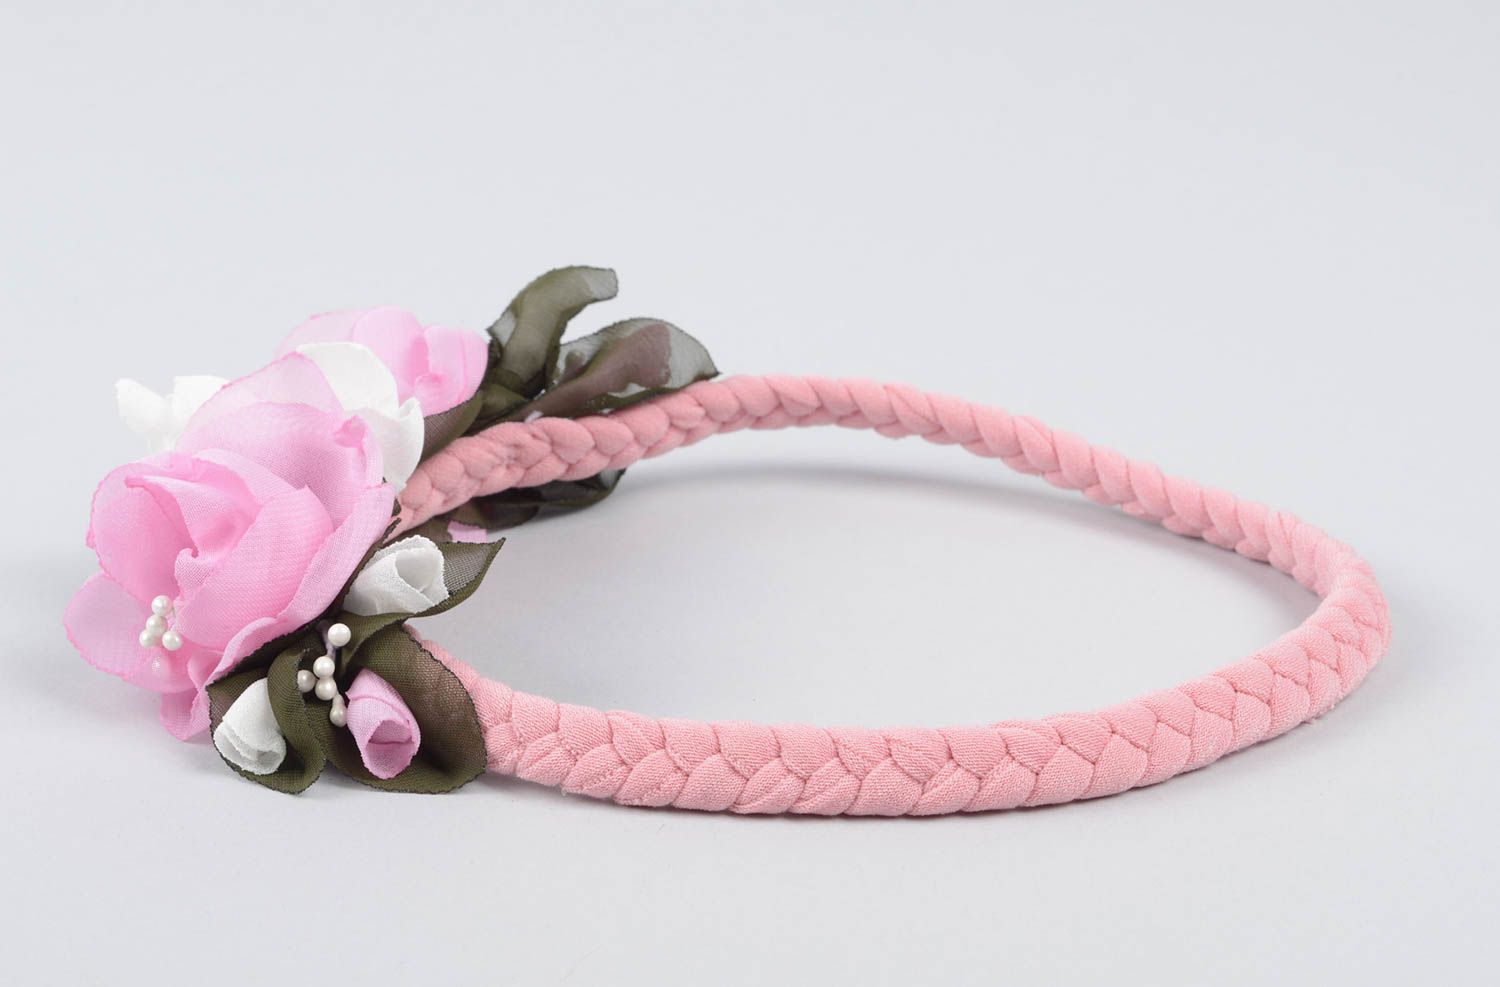 Stylish handmade headband flowers in hair beautiful hair ornaments small gifts photo 3